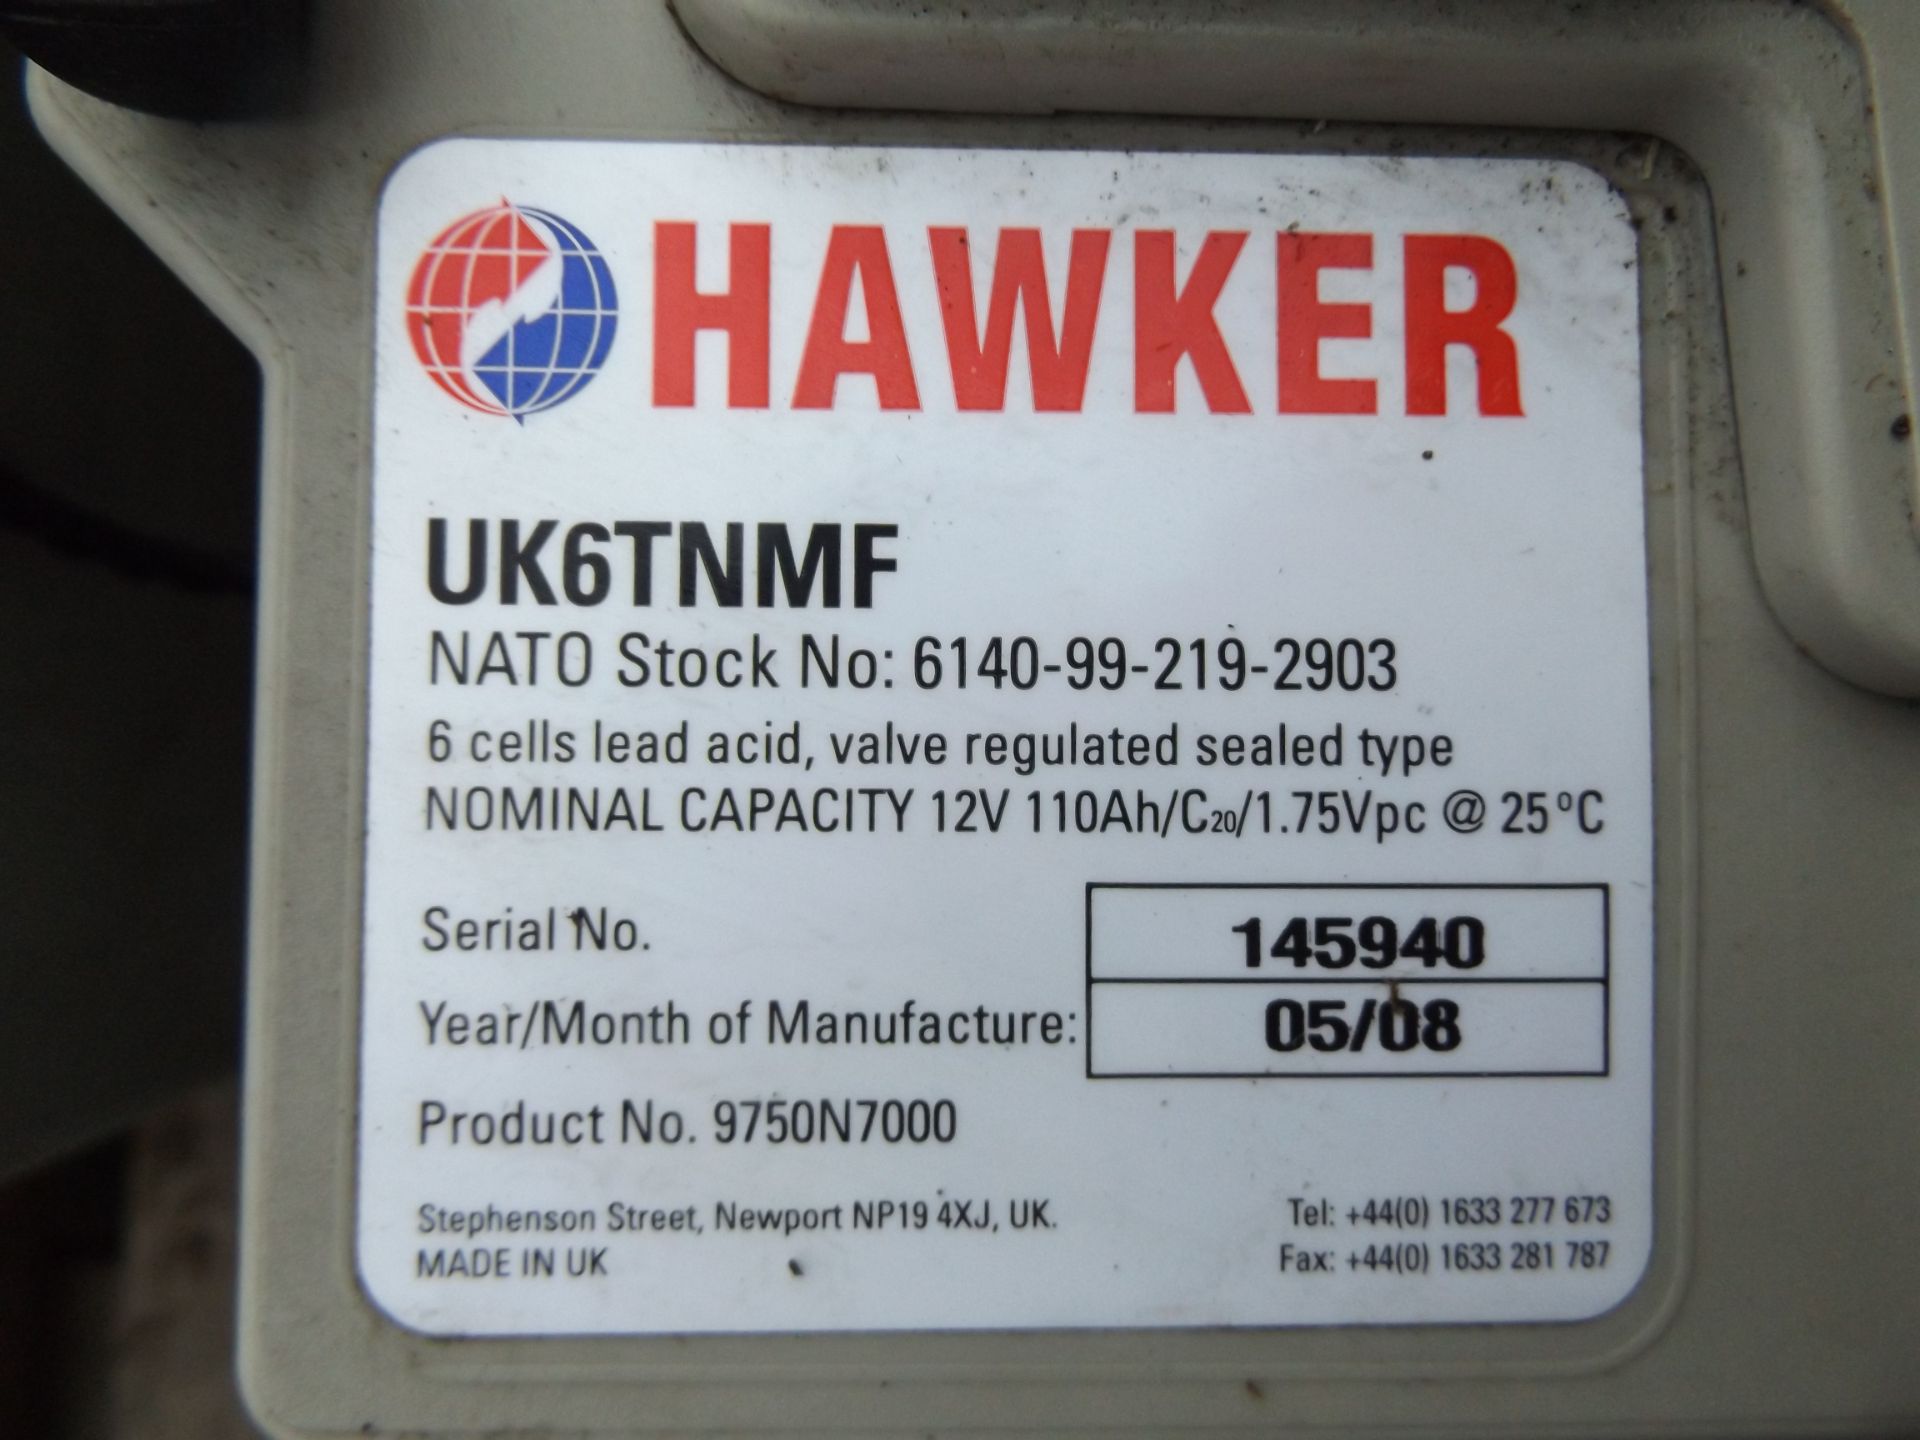 2 x Hawker UK6TNMF Rechargable Batteries - Image 5 of 5